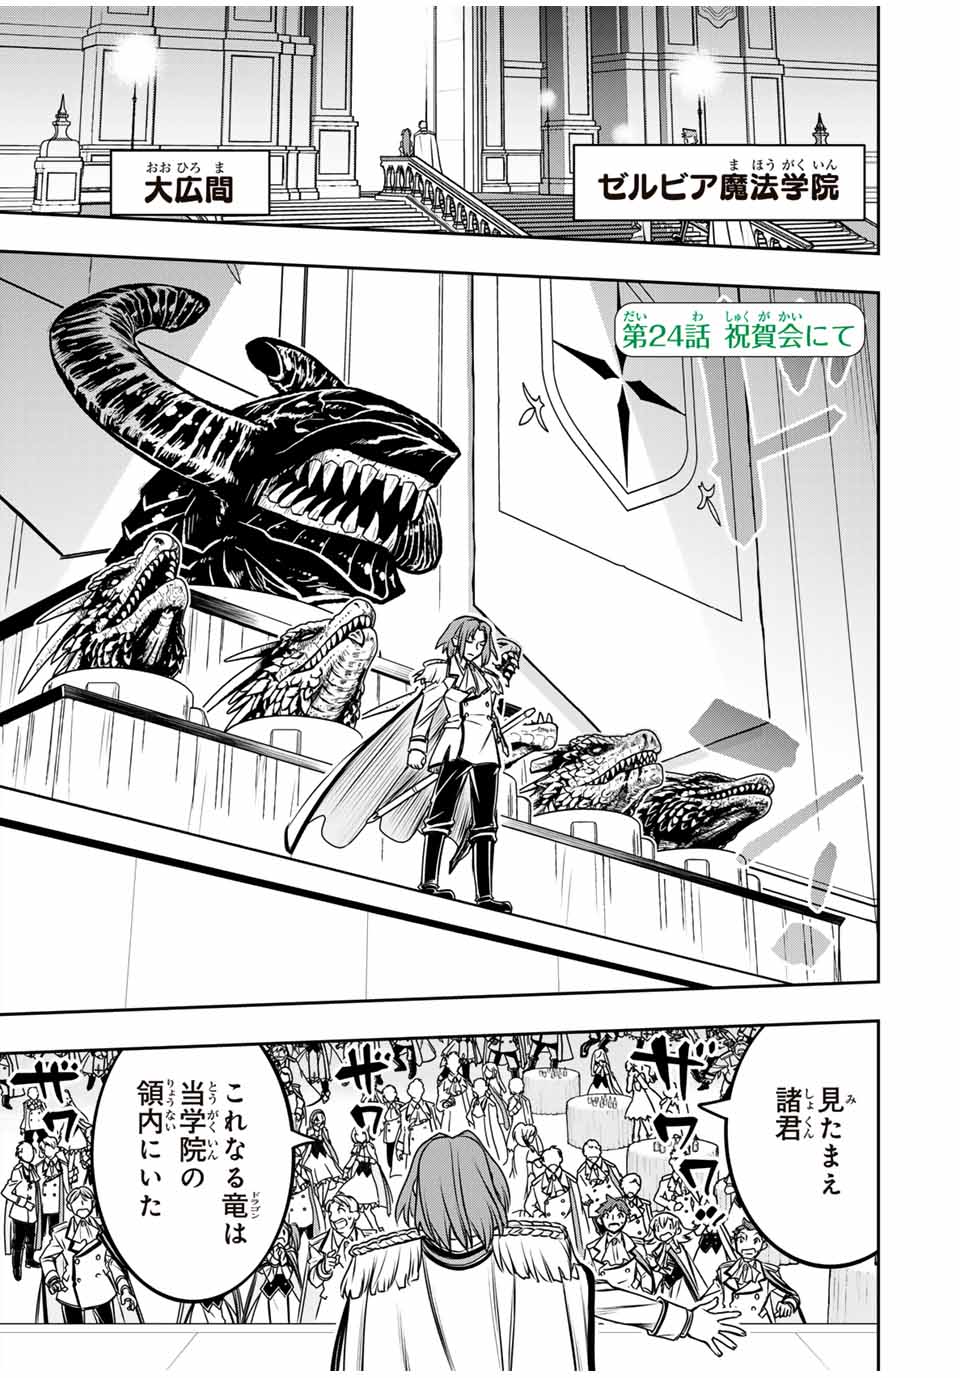 Nengan no Akuyaku Reijou (Last Boss) no Karada wo Teniiretazo!  - Chapter 24 - Page 1